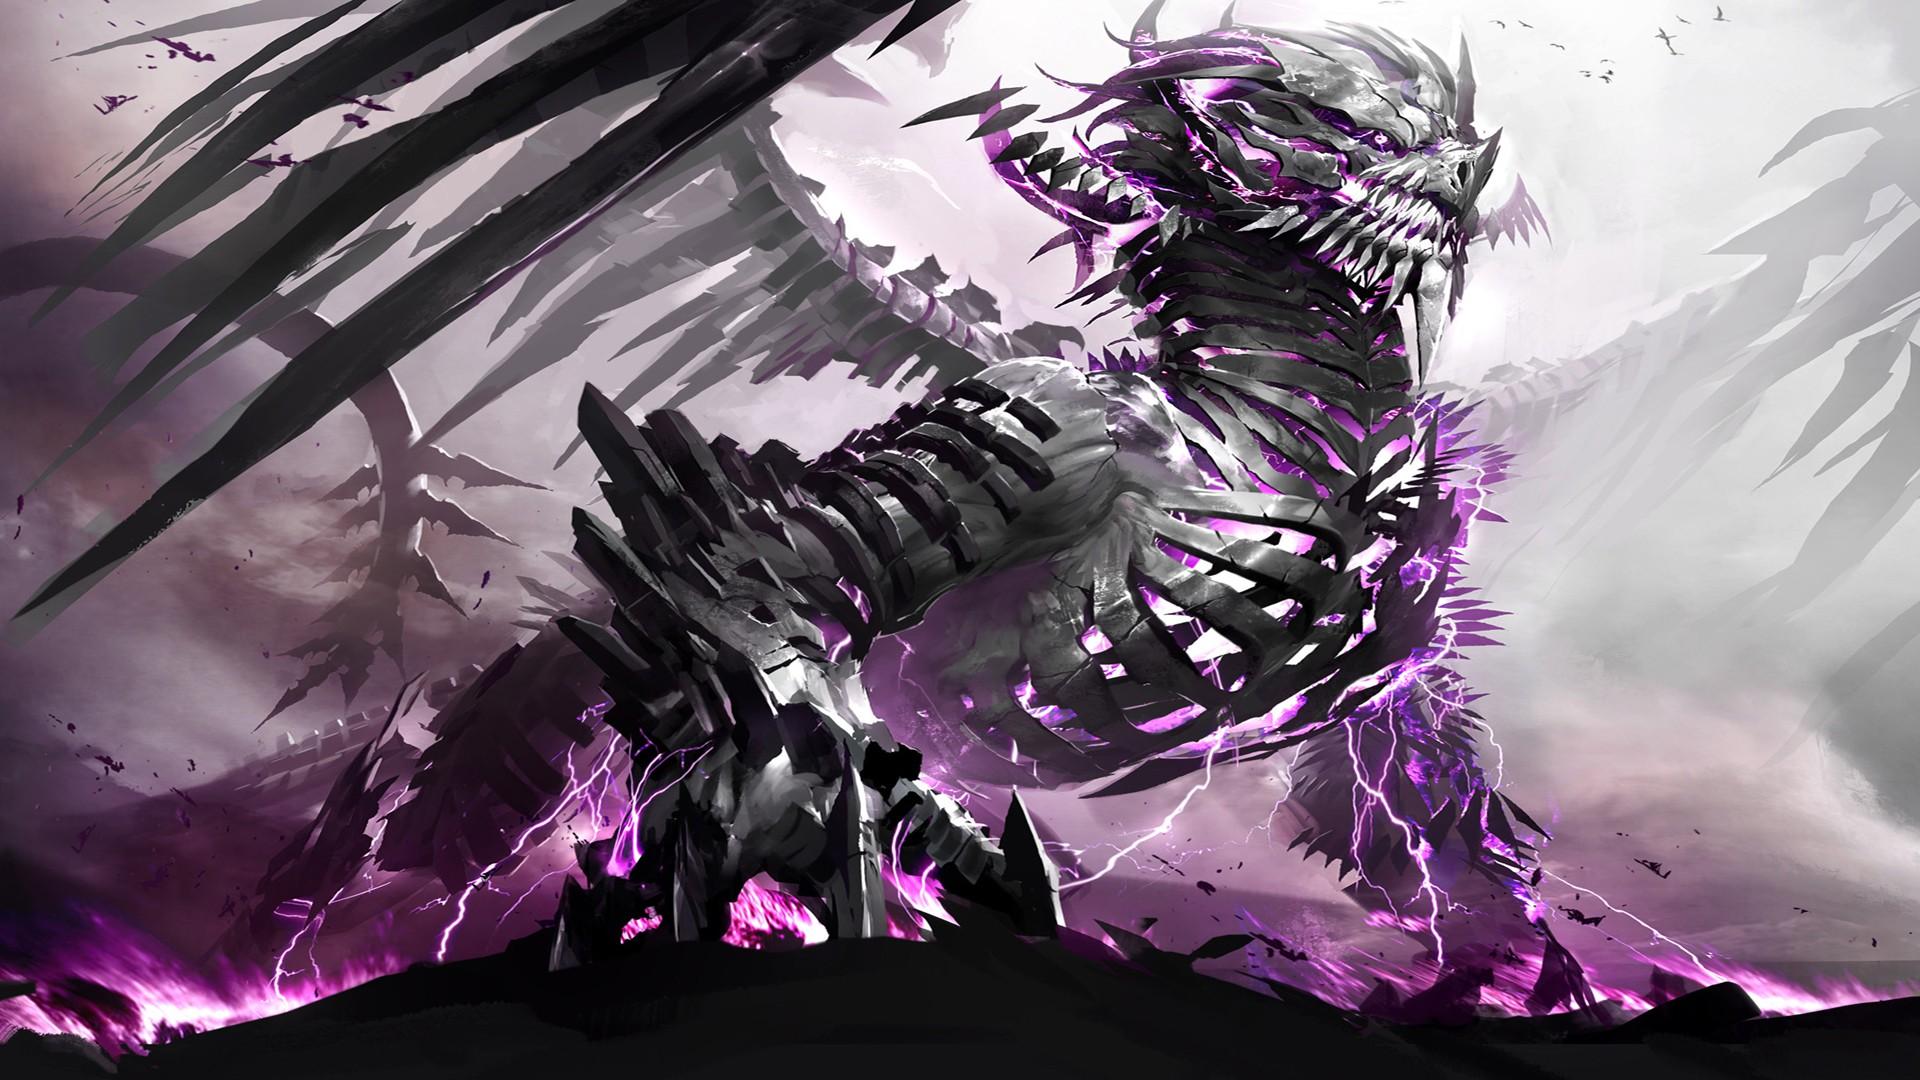 Dragon Background